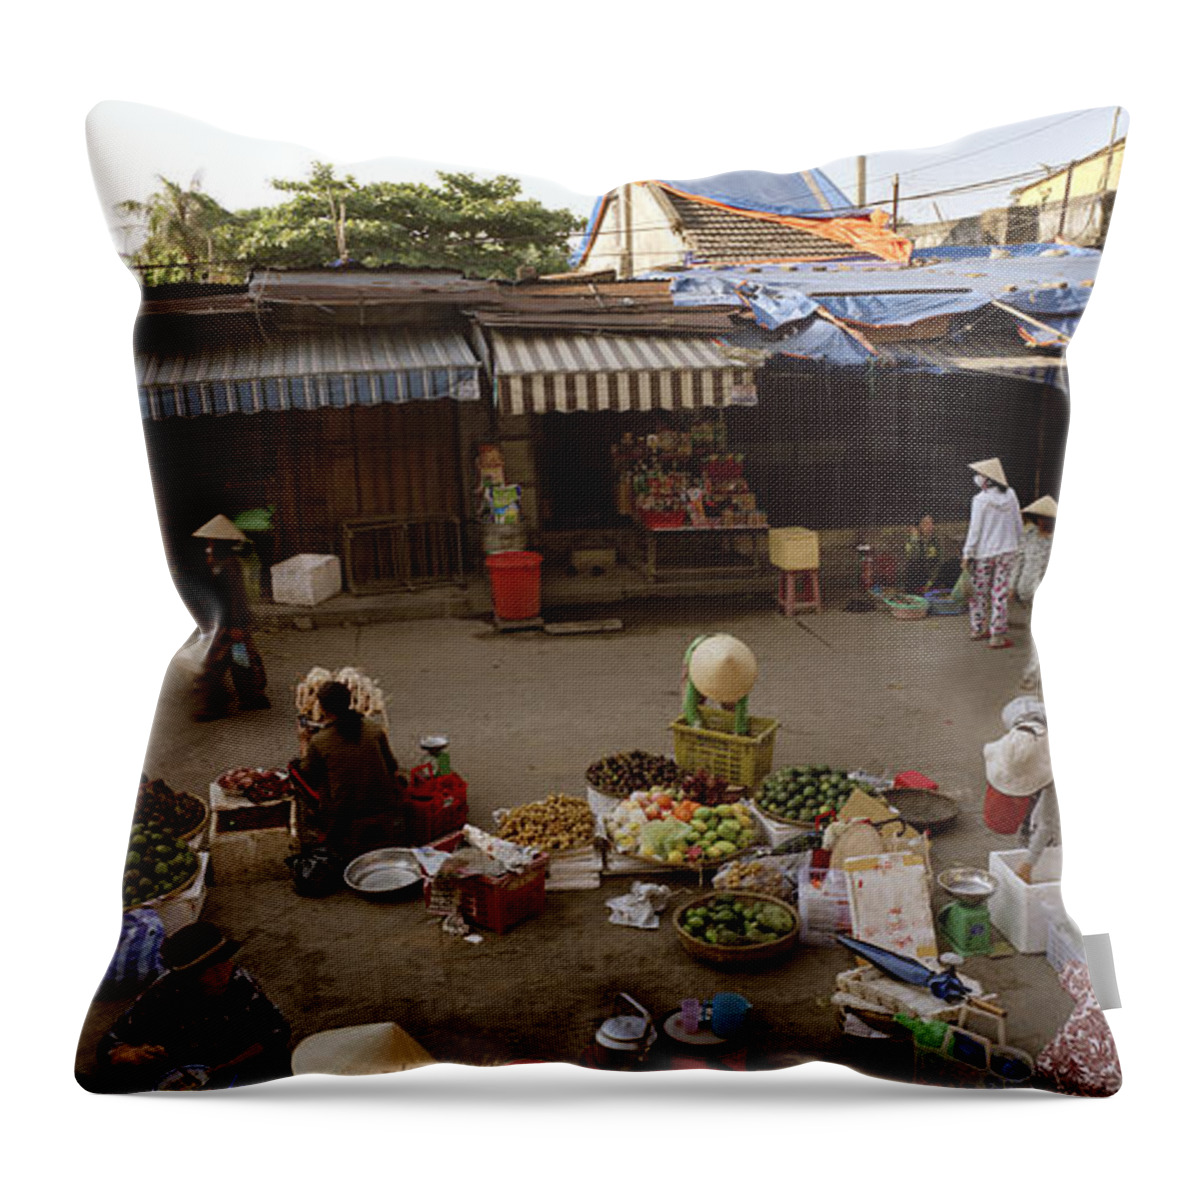 Hoi An Throw Pillow featuring the photograph Hoi An Market by Shaun Higson